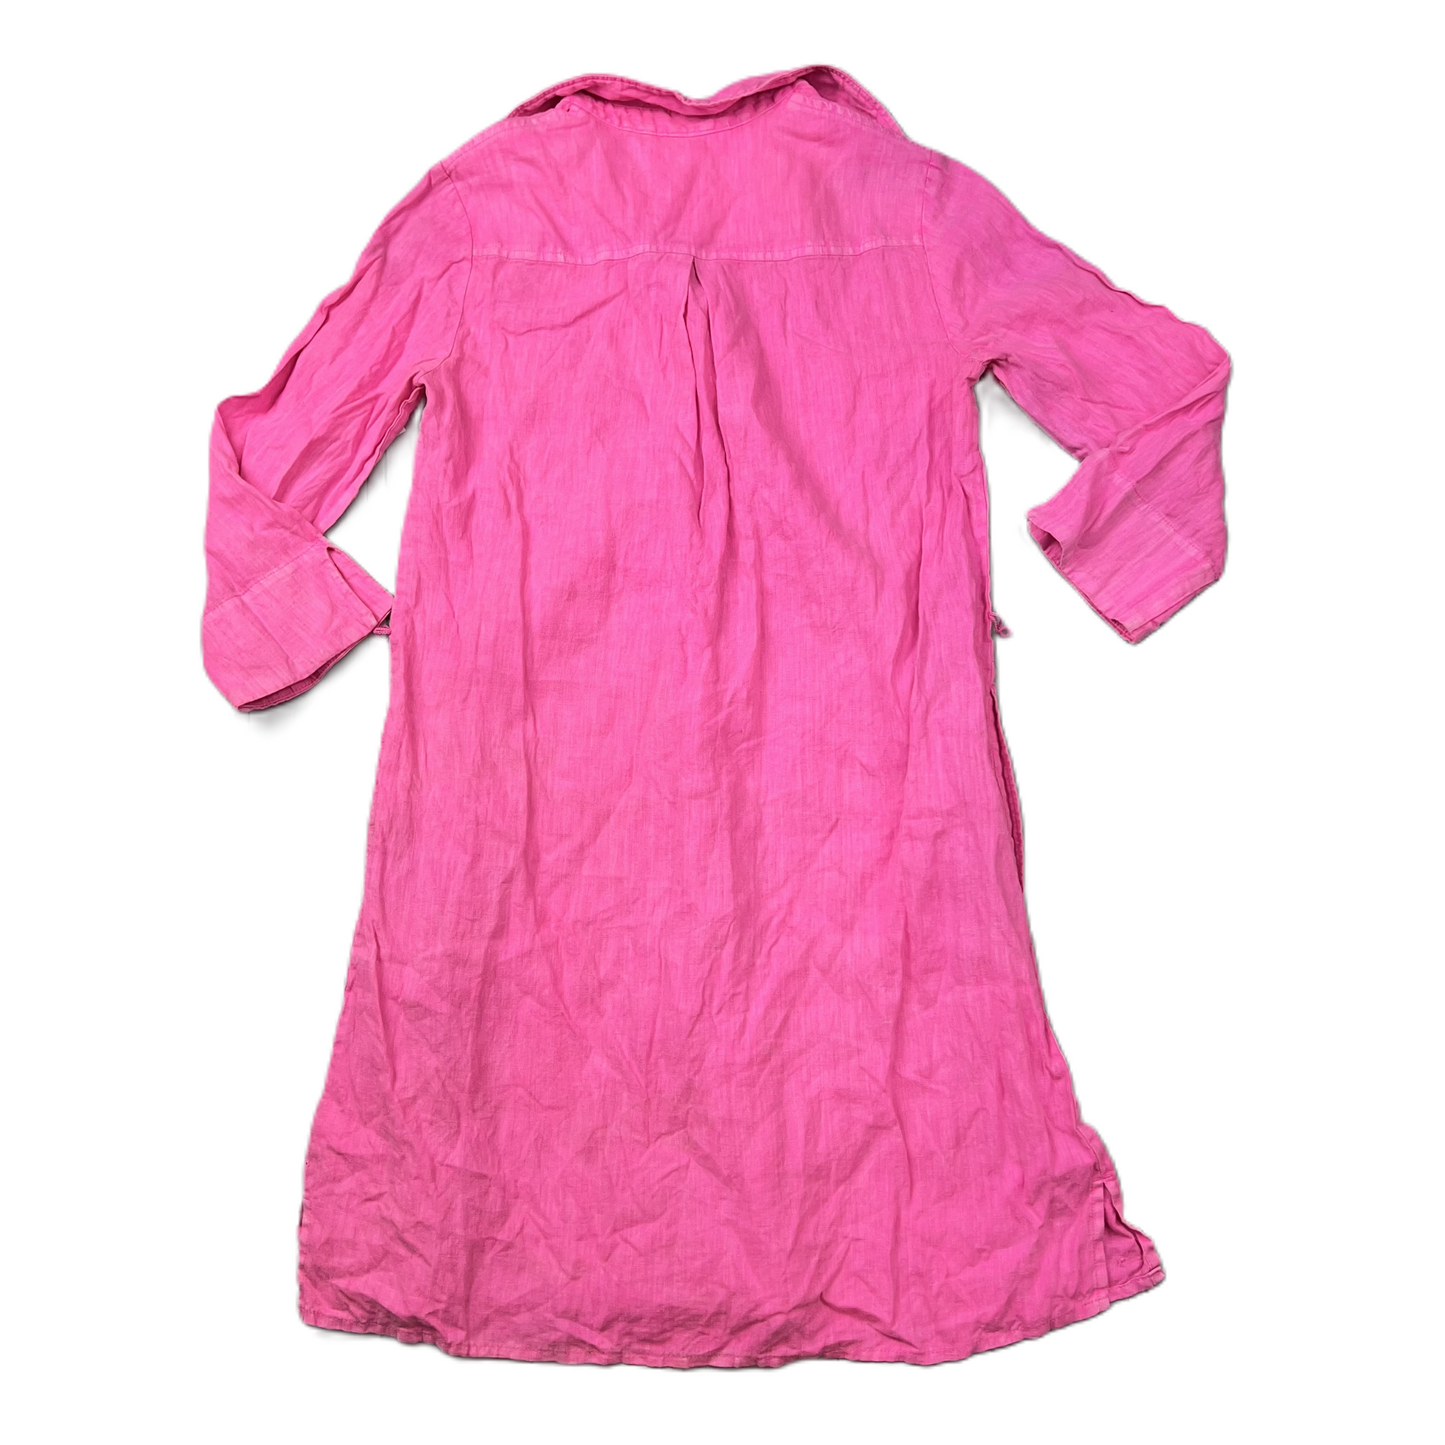 Pink Dress Designer By Lilly Pulitzer, Size: Xxs